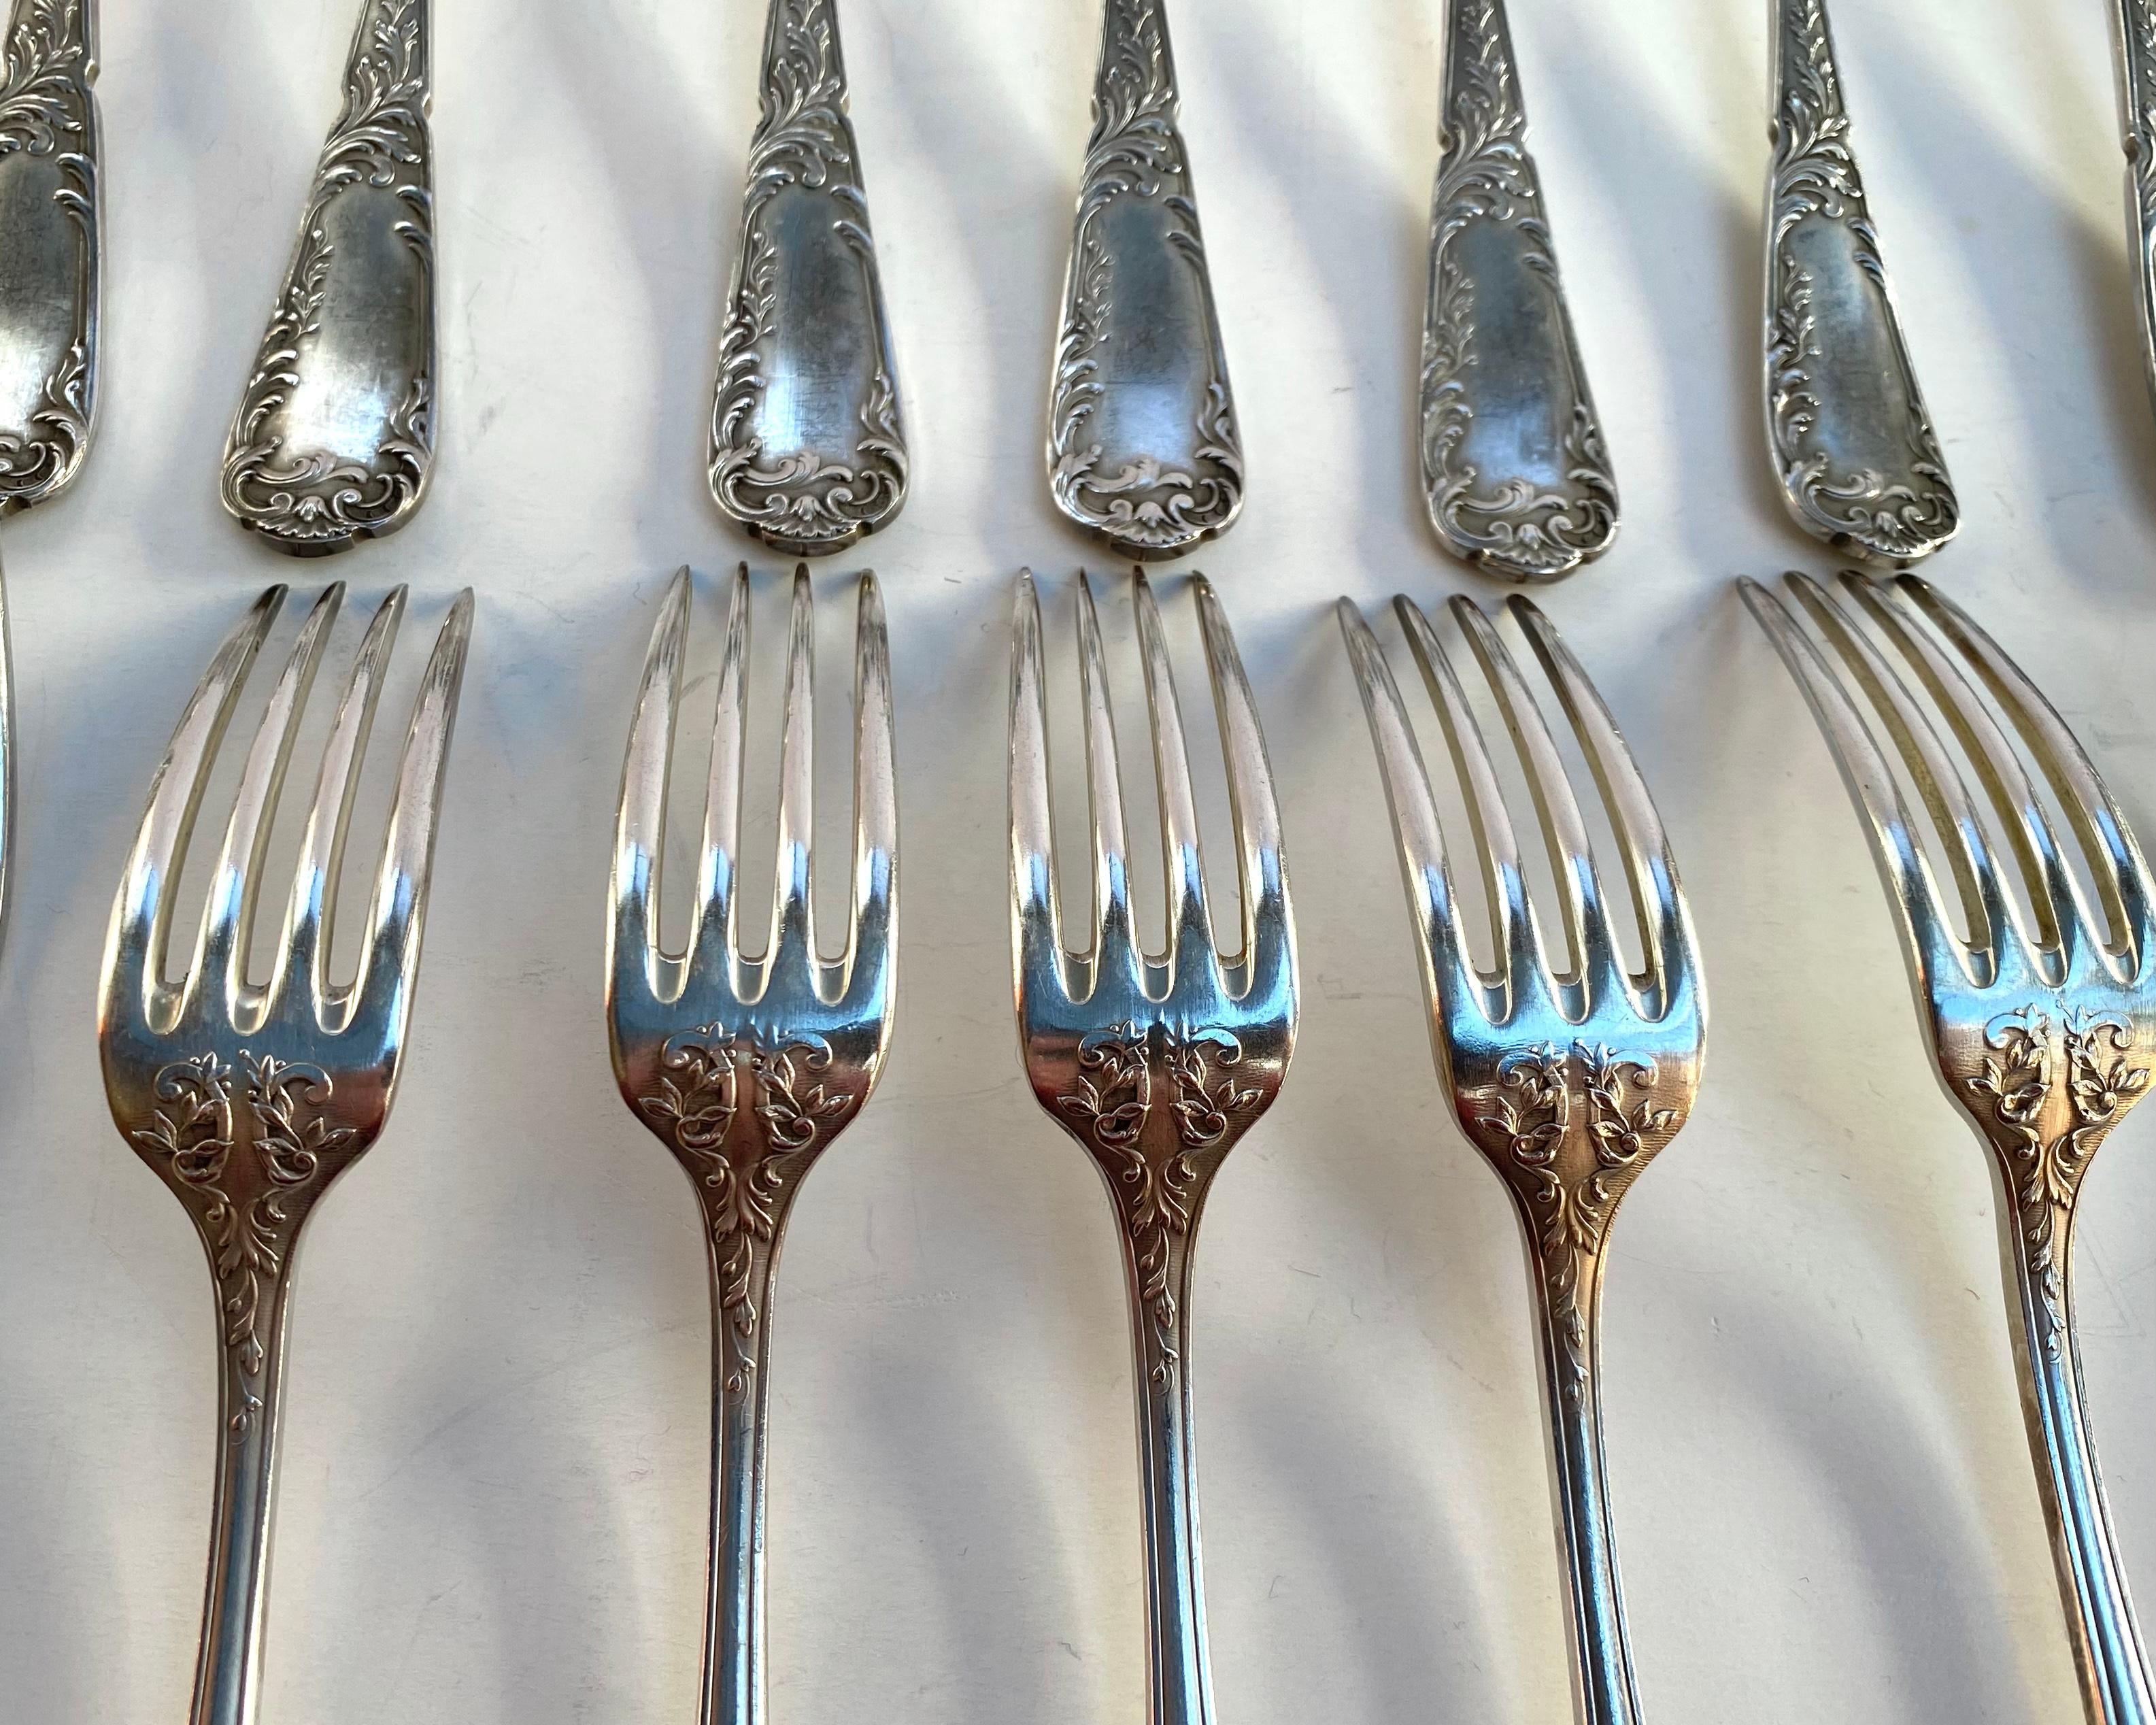 Vintage Silver Plate Utensils 12 Spoons 12 Forks France 1950s In Excellent Condition For Sale In Bastogne, BE